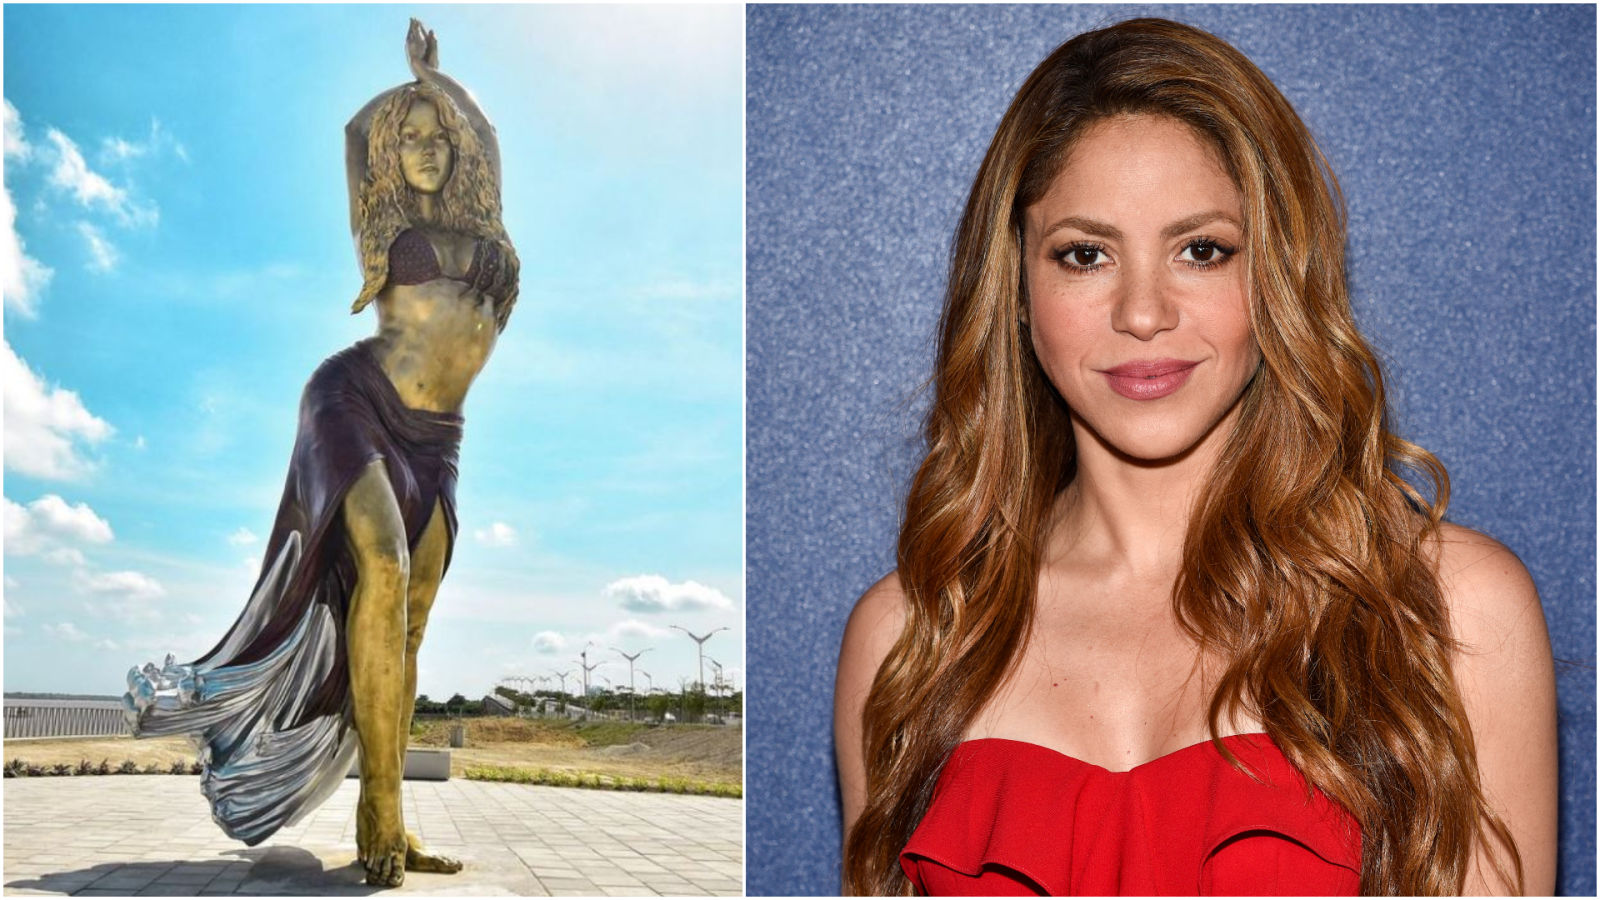 Huge 6.5 metrehigh bronze Shakira statue unveiled in her Colombian